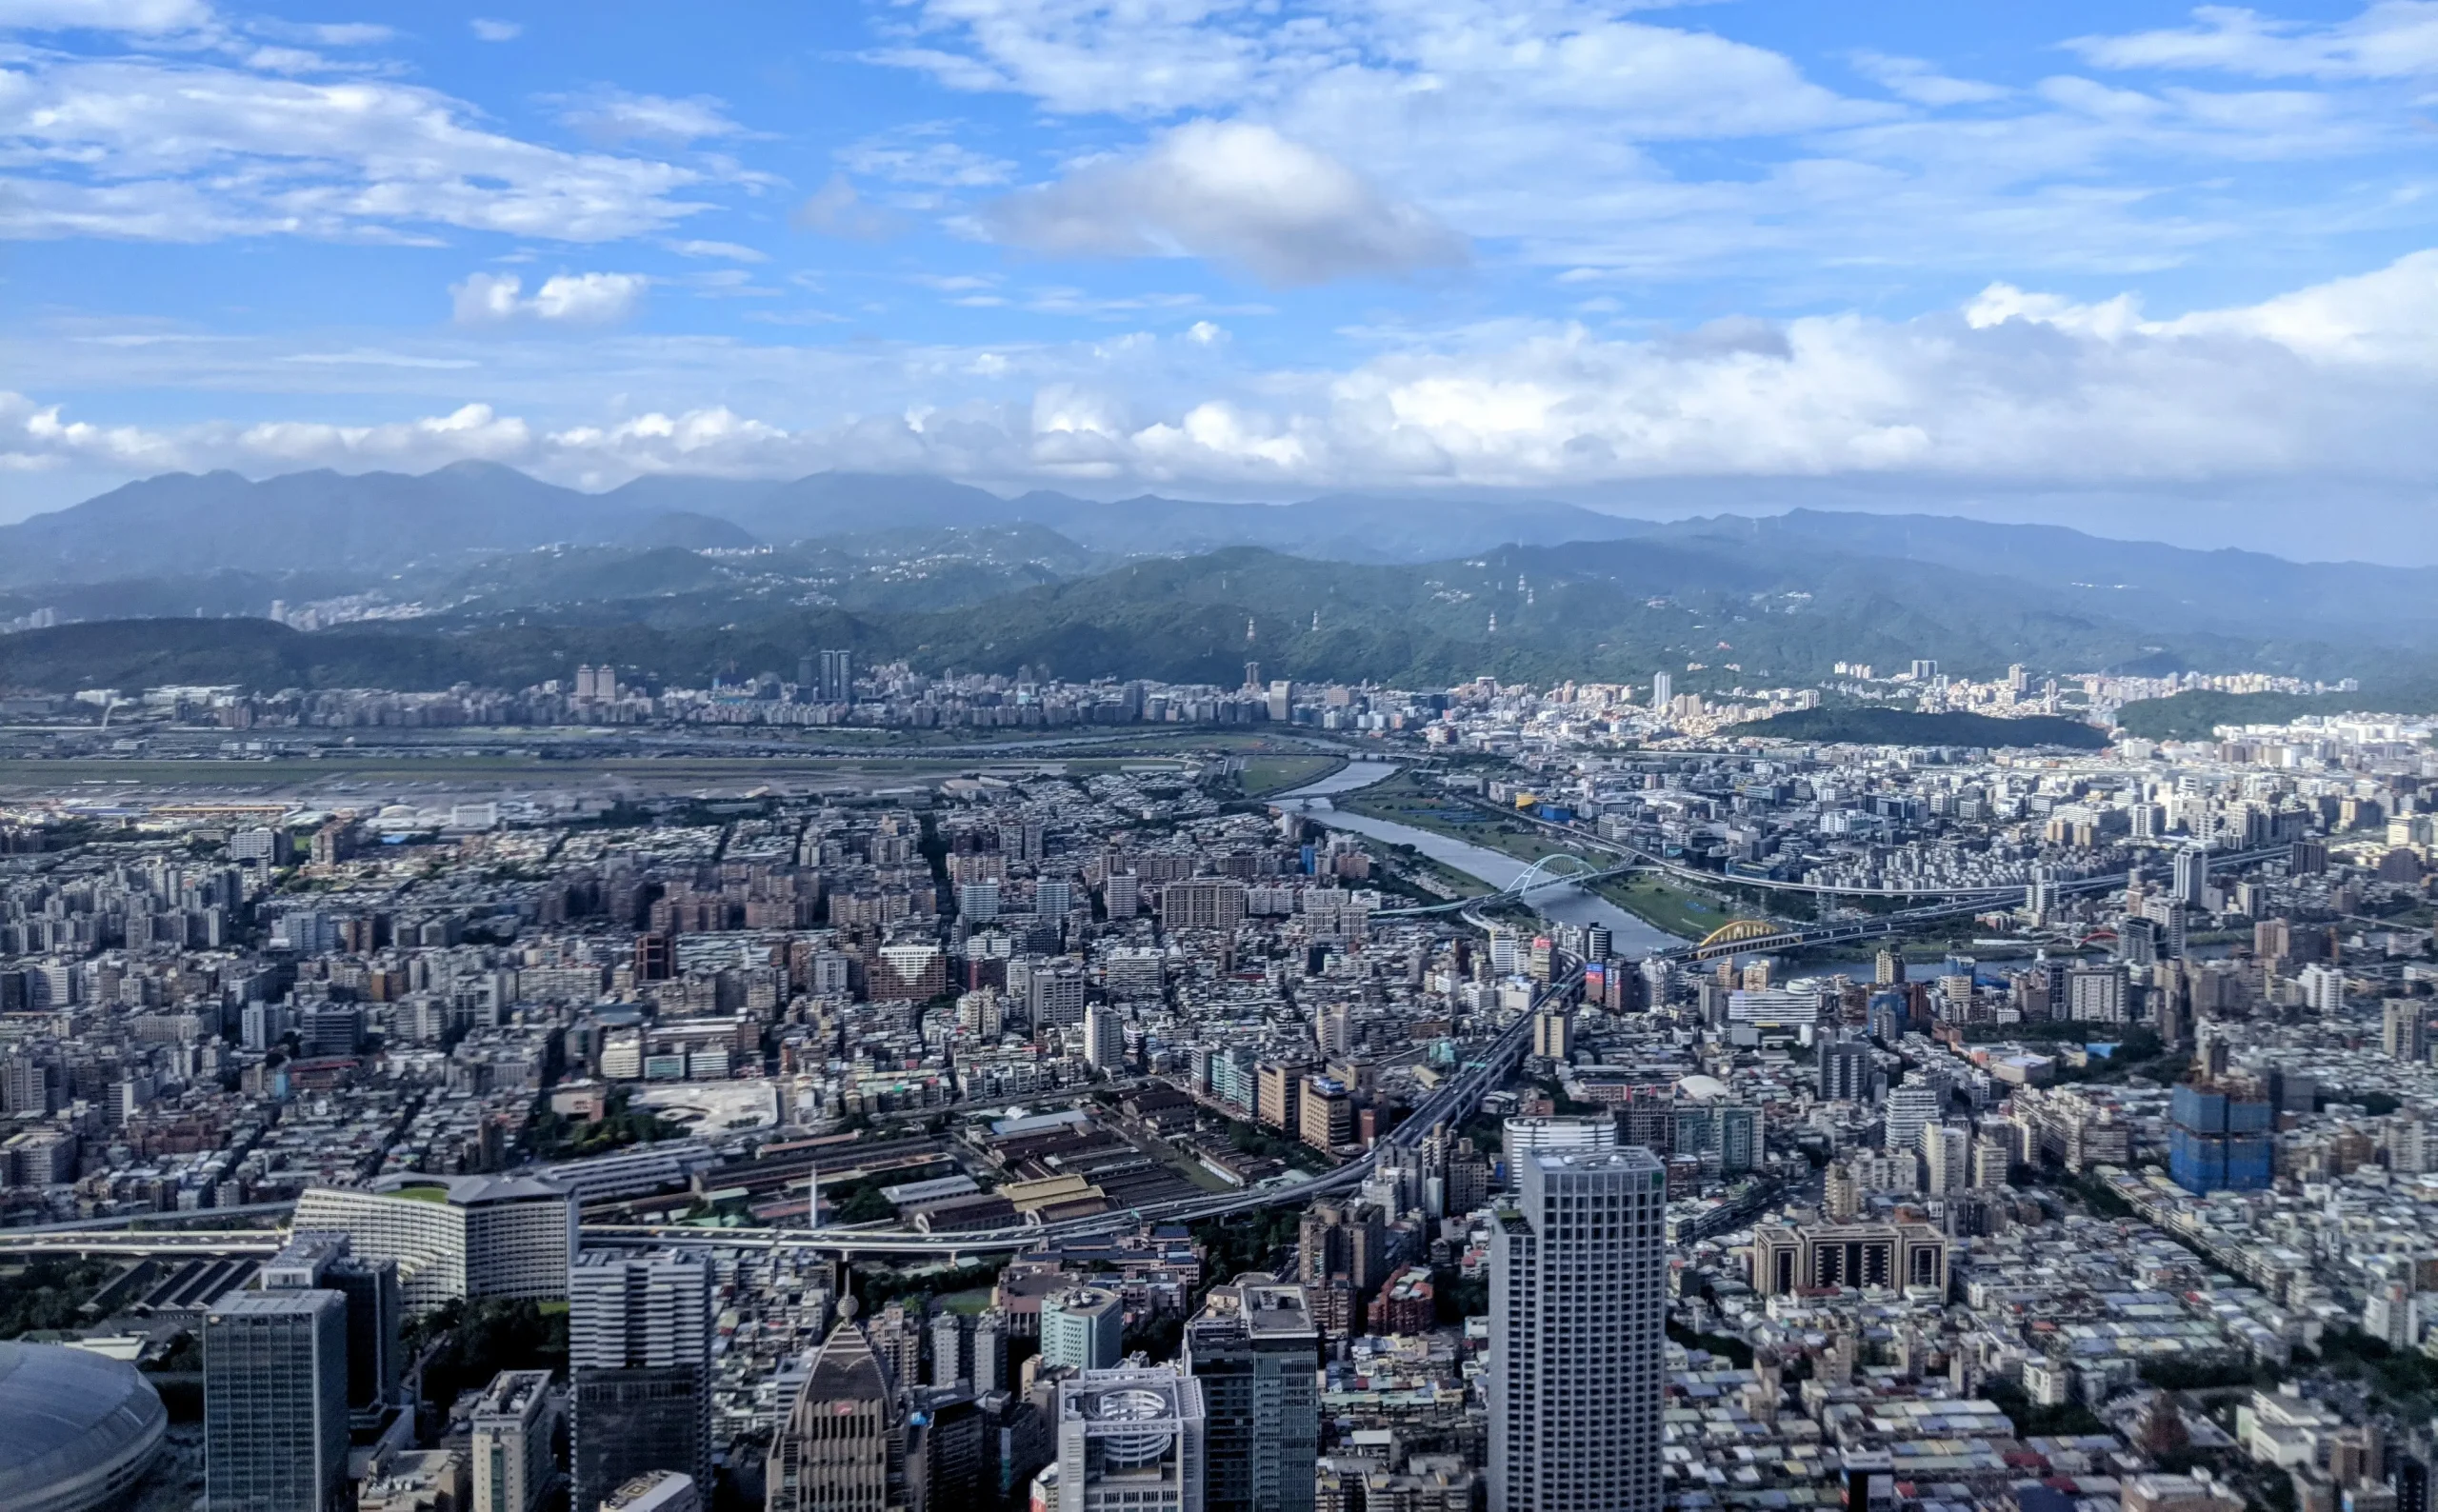 view of taipei city from the top of taipei 101